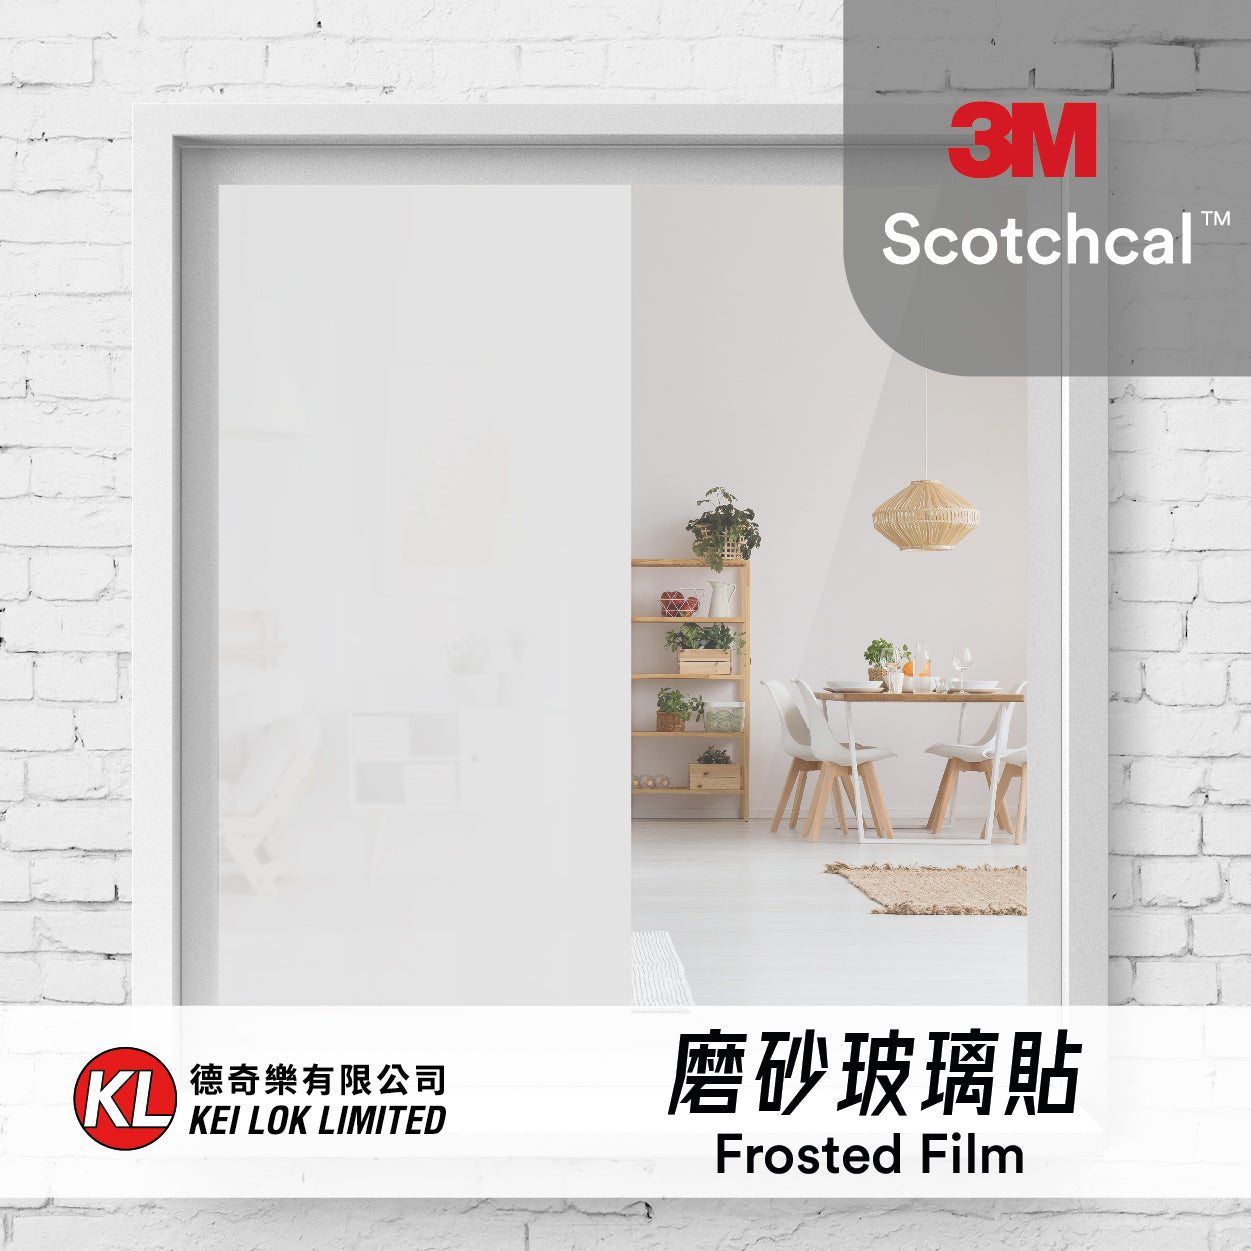 3M Scotchcal Frost Film